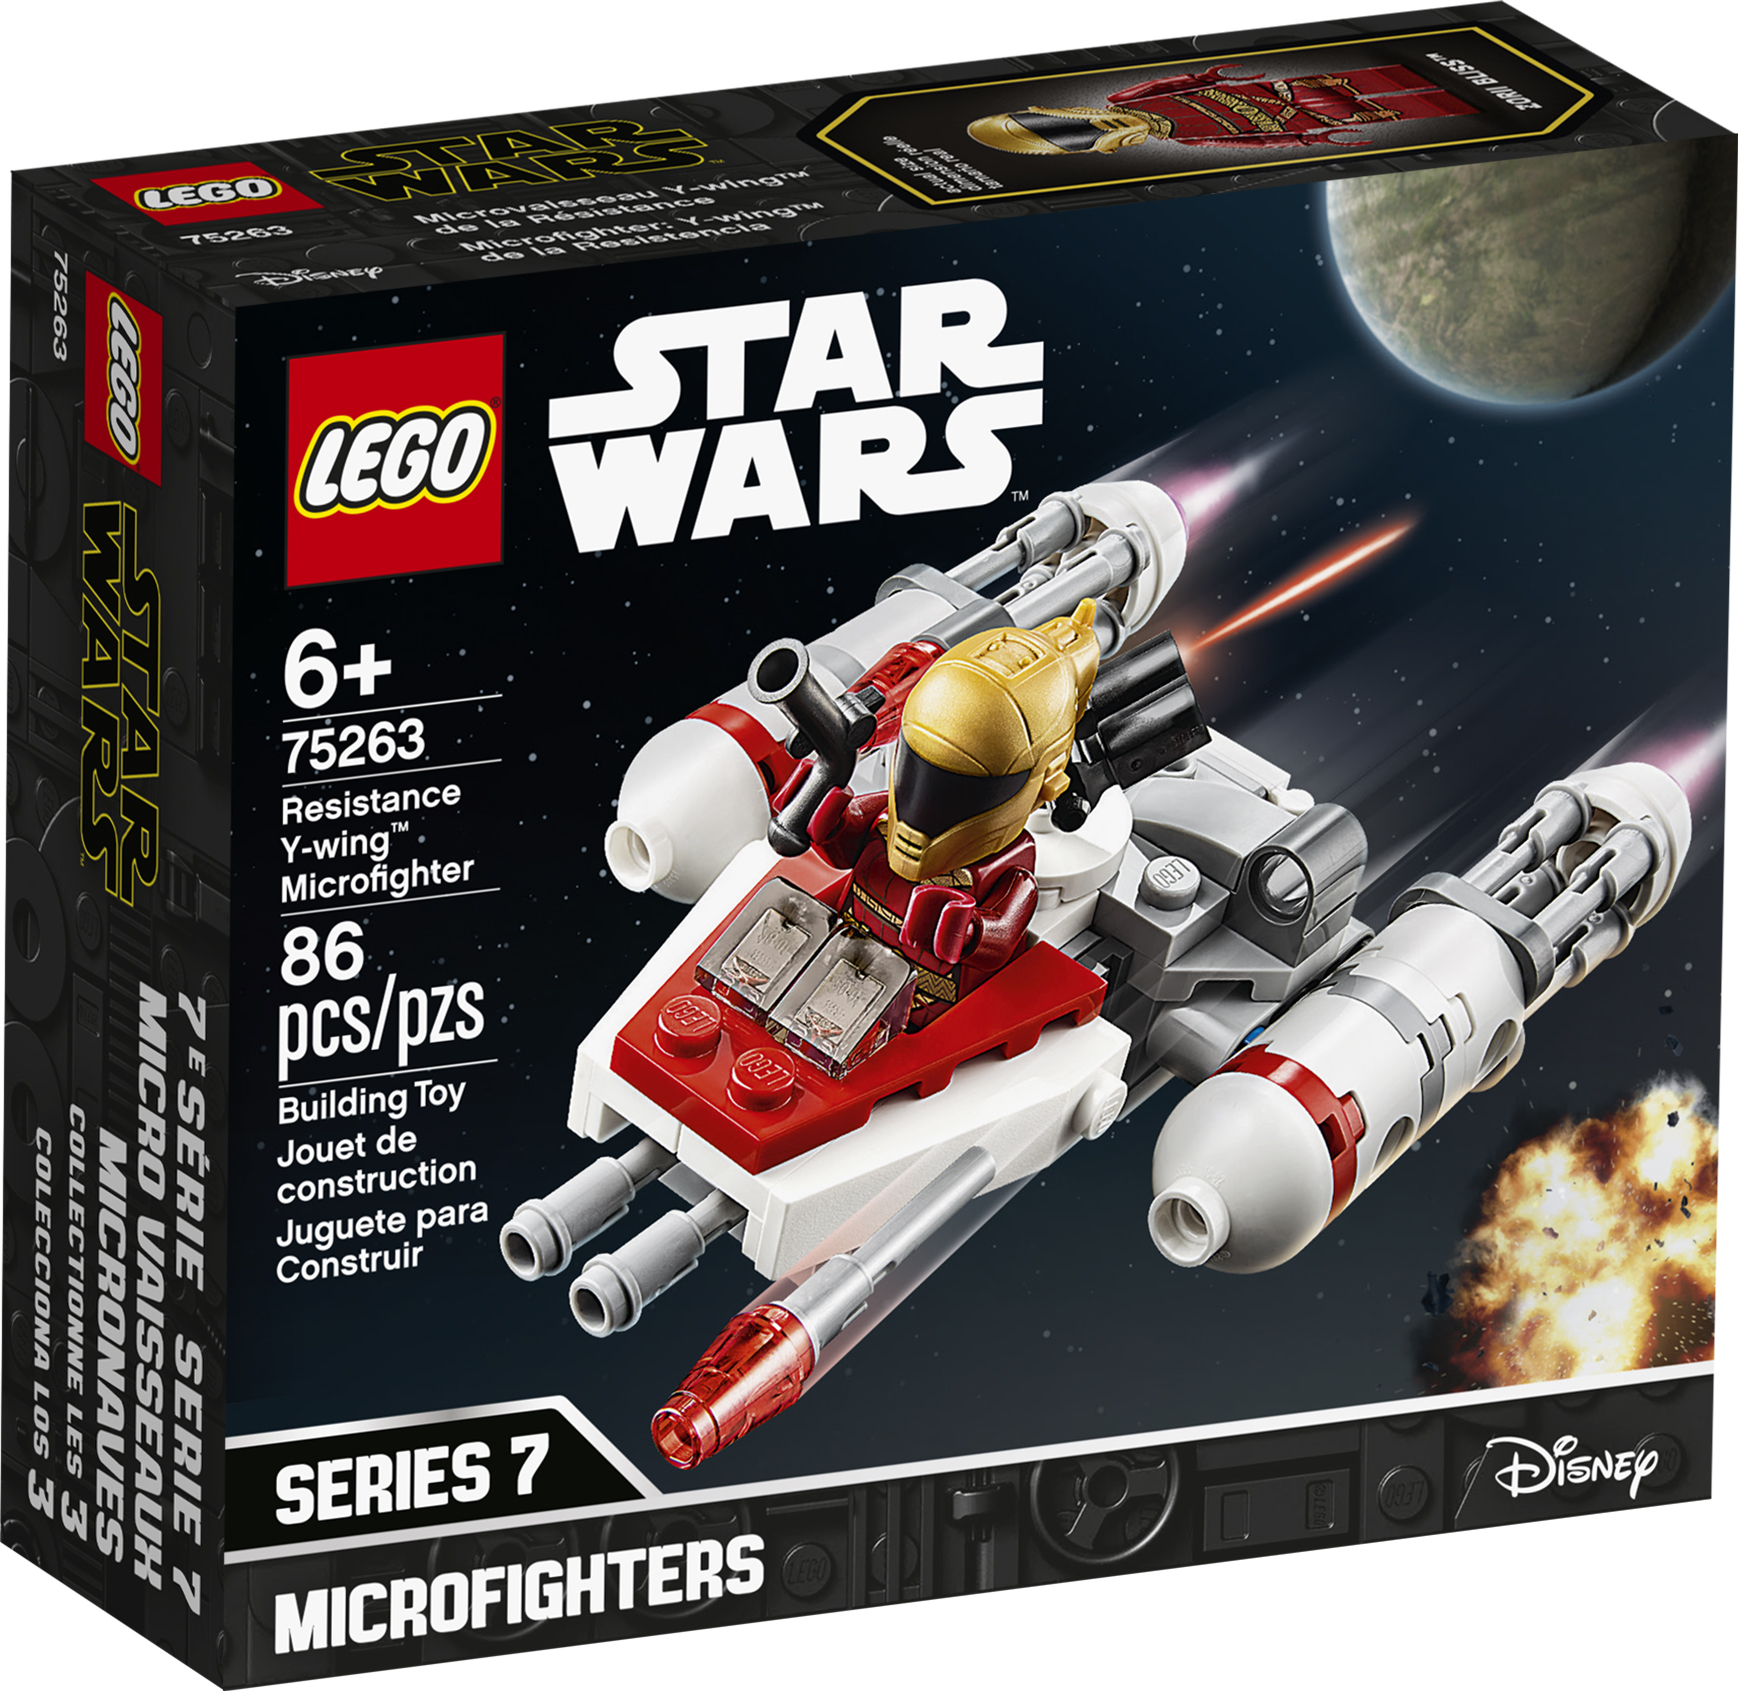 TROS Resistance Y-wing Microfighter Lego Set 1